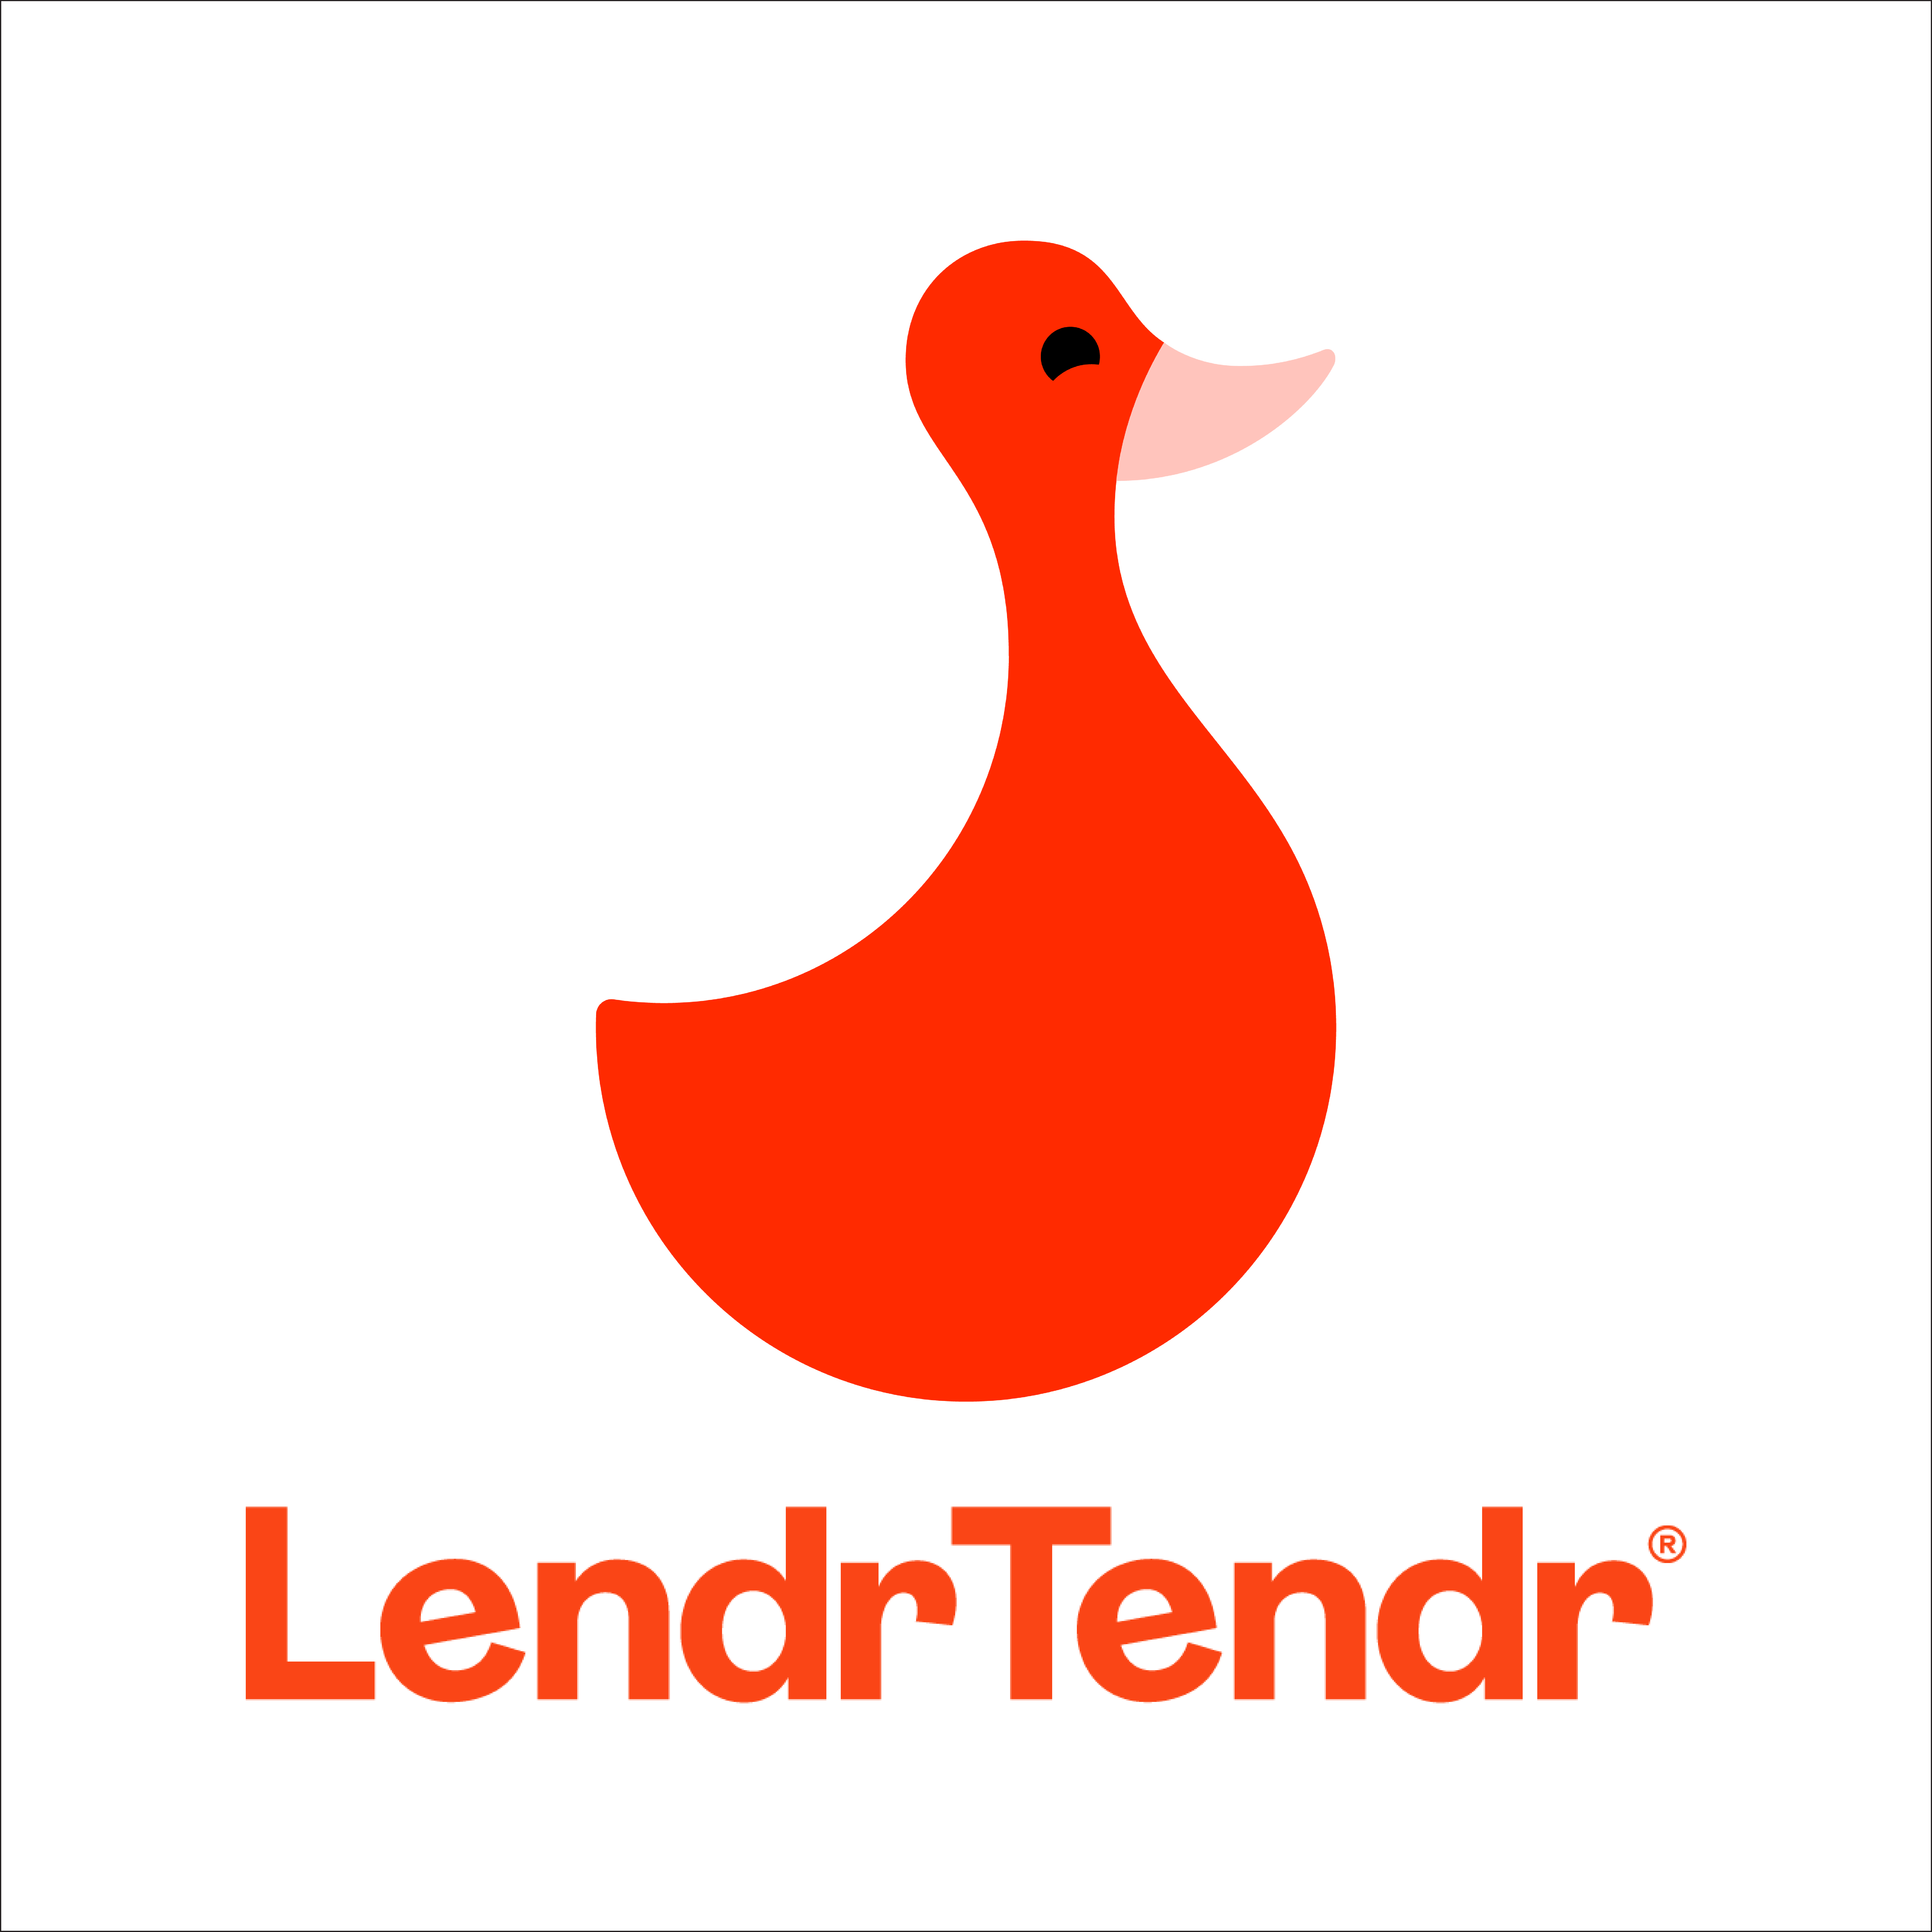 LendrTendr Brand Identity logo design by logo designer DSR Branding for your inspiration and for the worlds largest logo competition